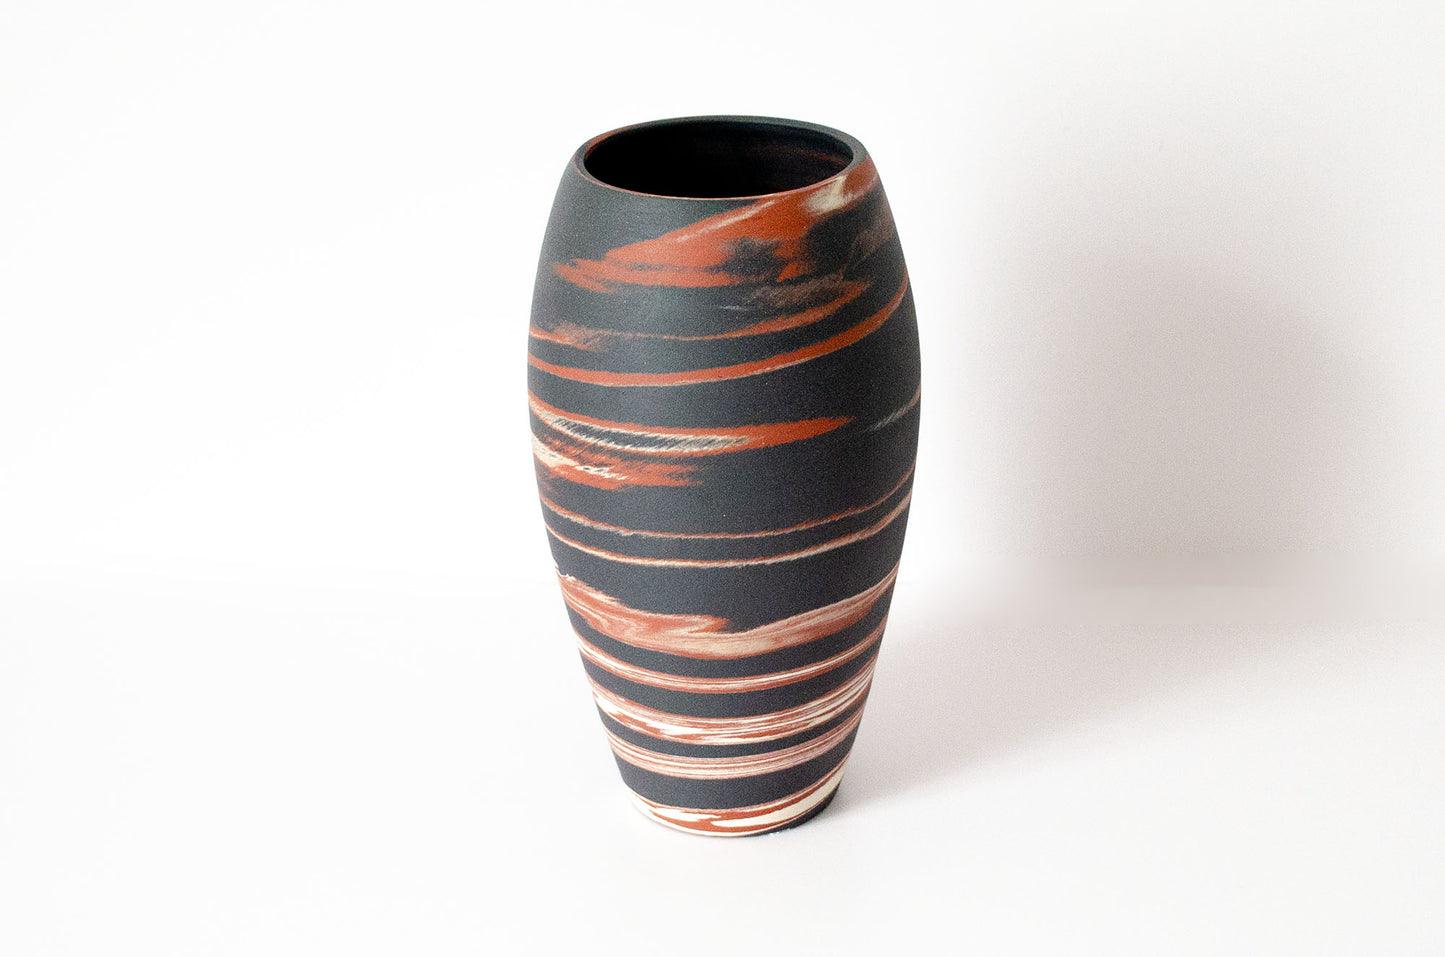 Tall Decorative Vase